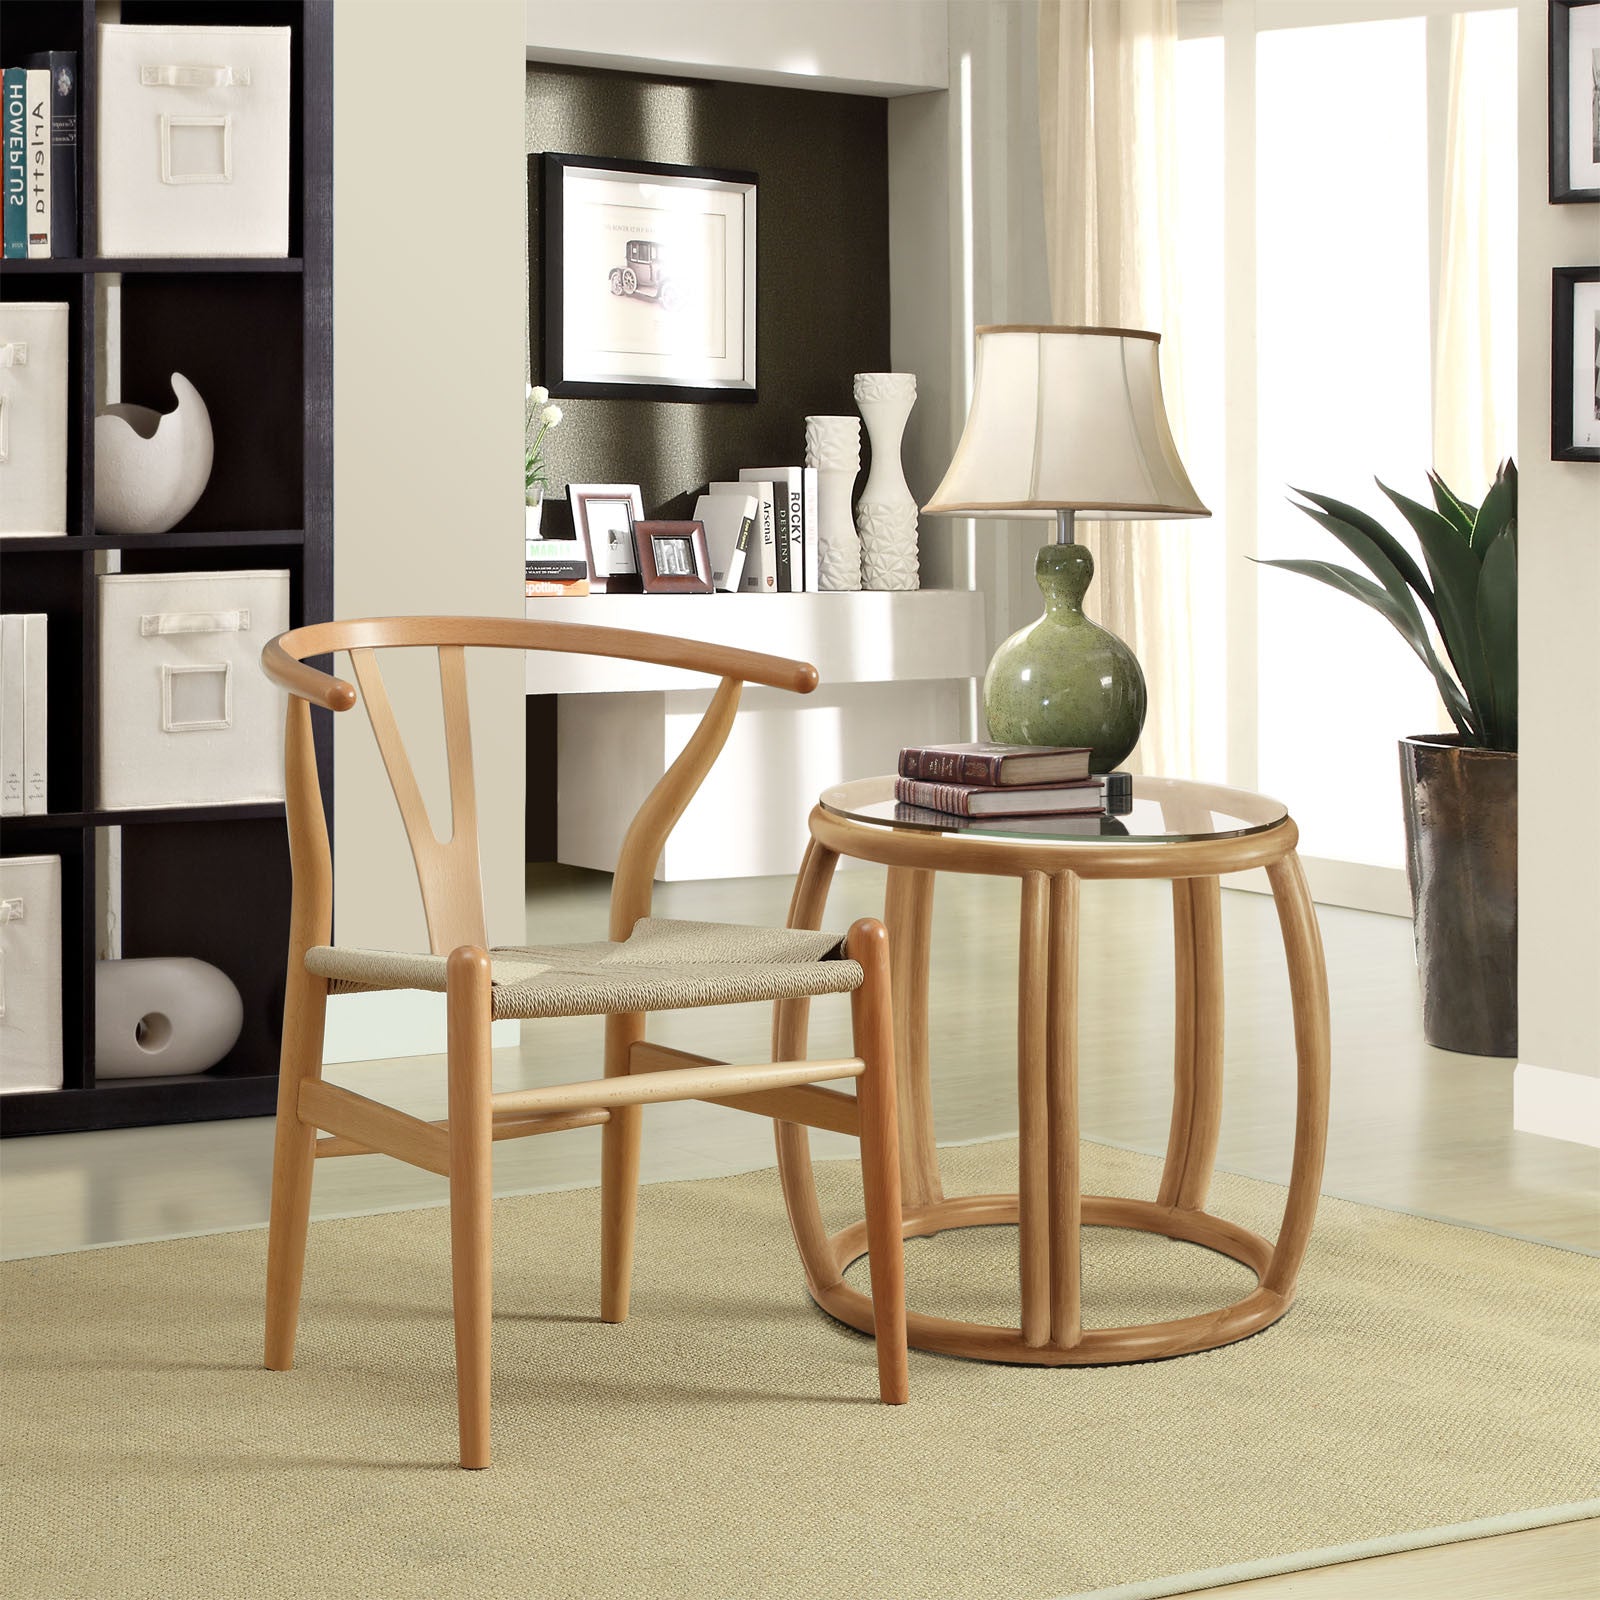 Hans Wegner Wishbone style Dining Chair - living-essentials